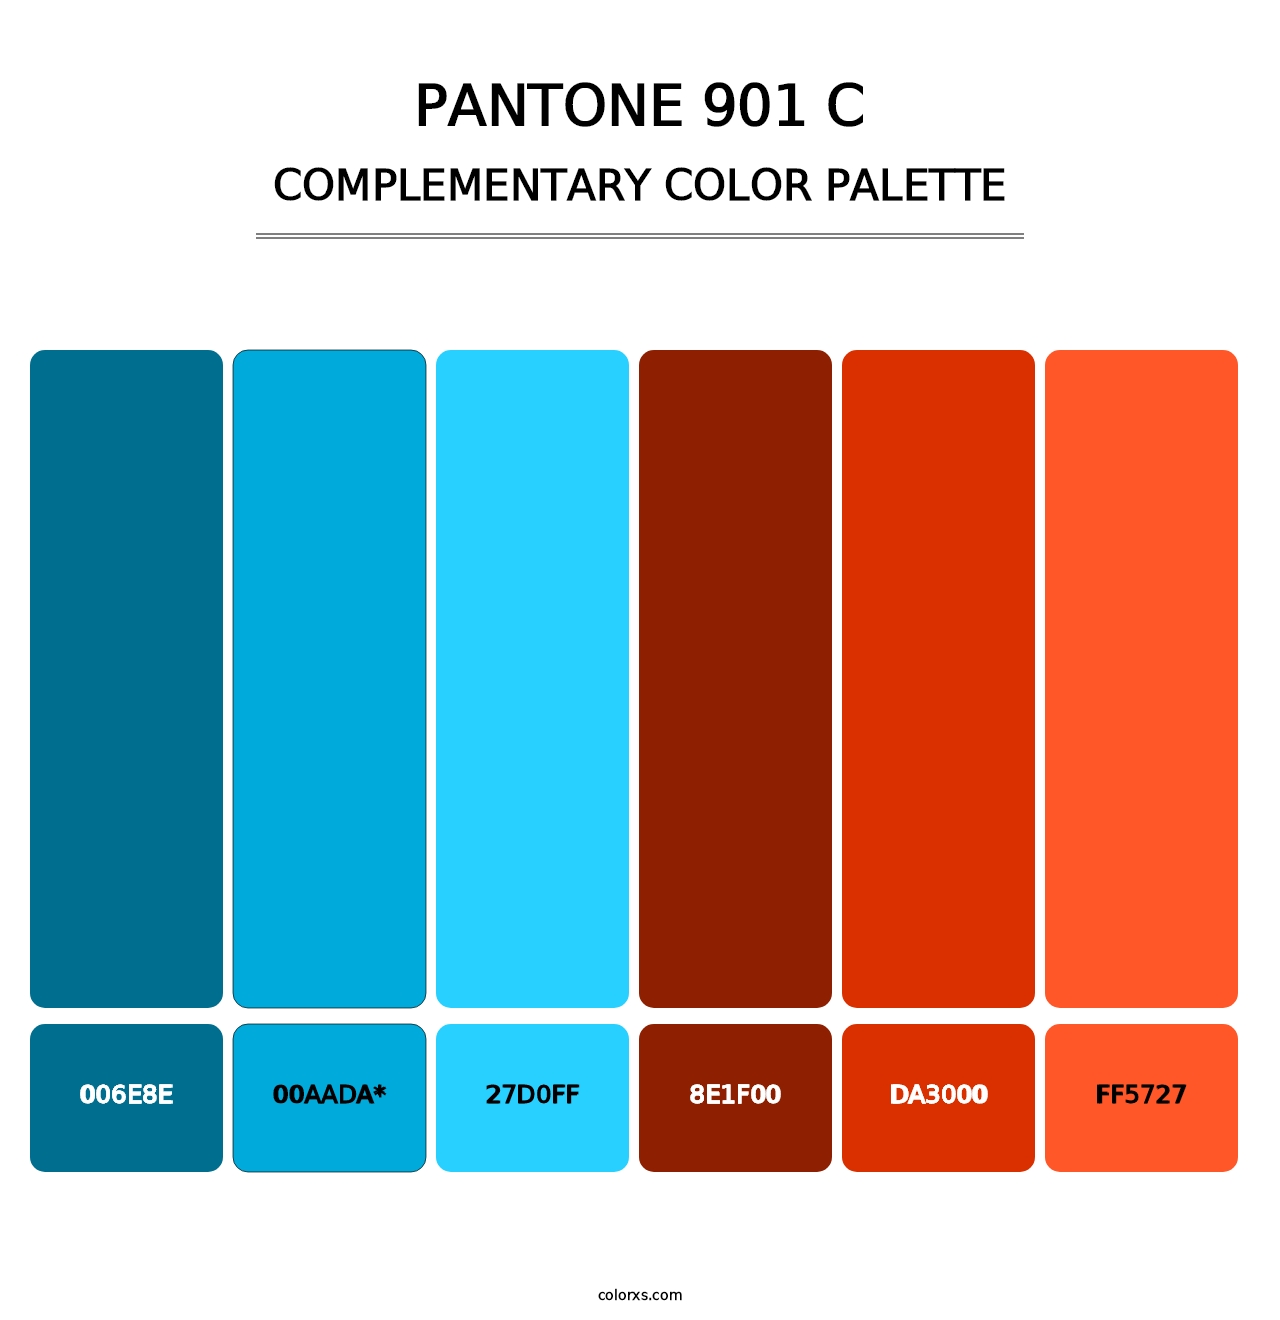 PANTONE 901 C - Complementary Color Palette